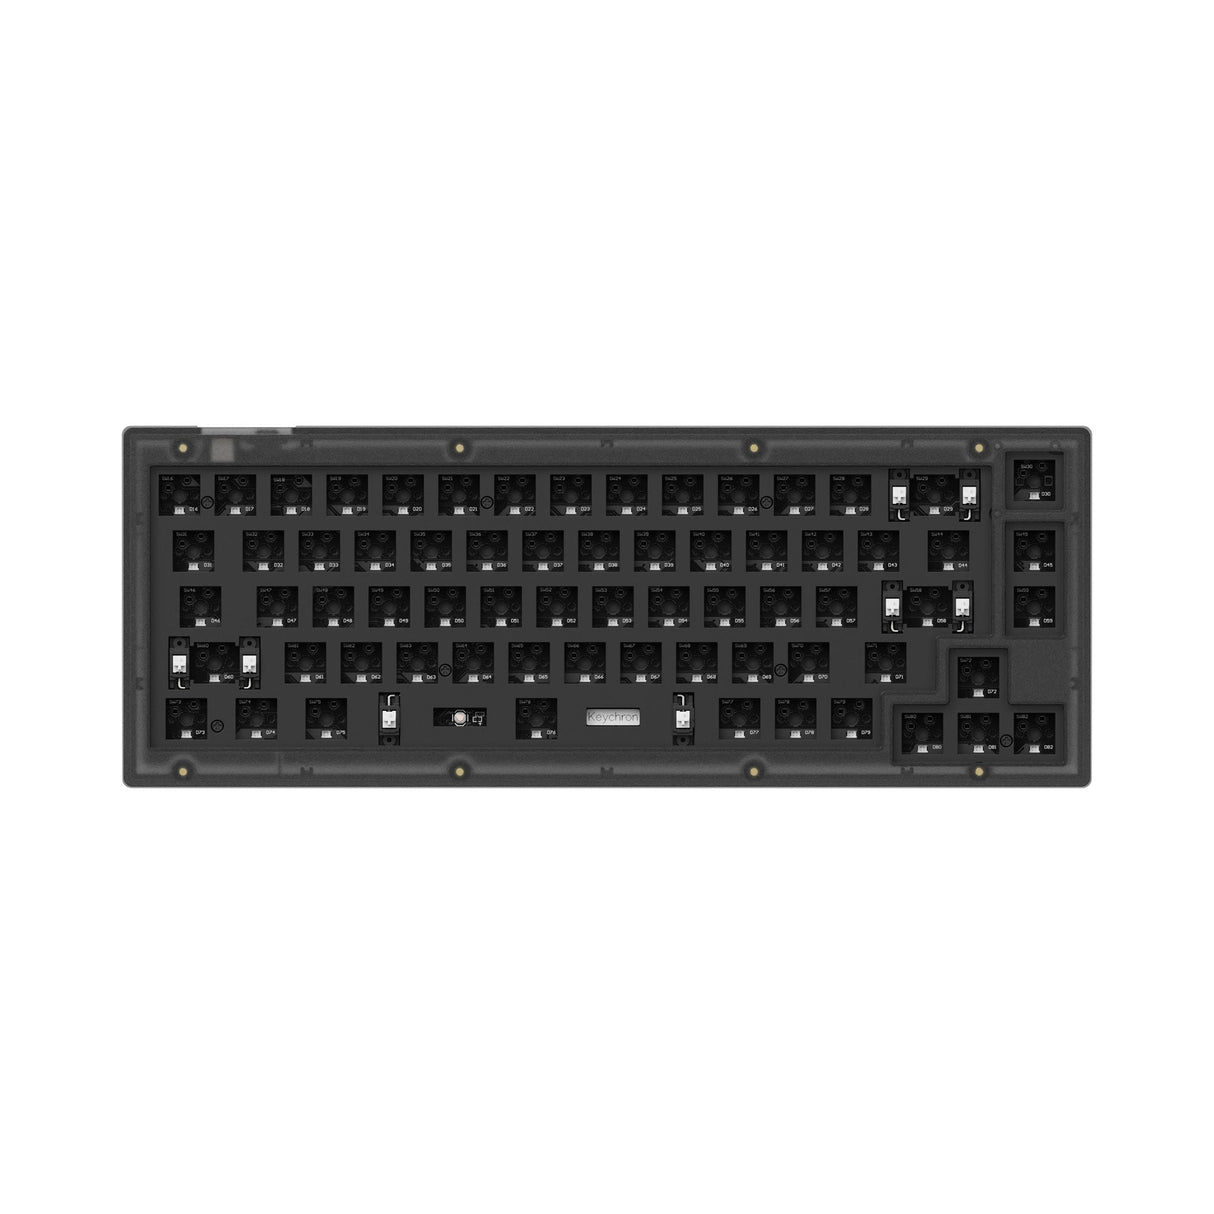 Keychron V2 Custom Mechanical Keyboard frosted black QMK-VIA 65 percent layout hot-swappable Barebone